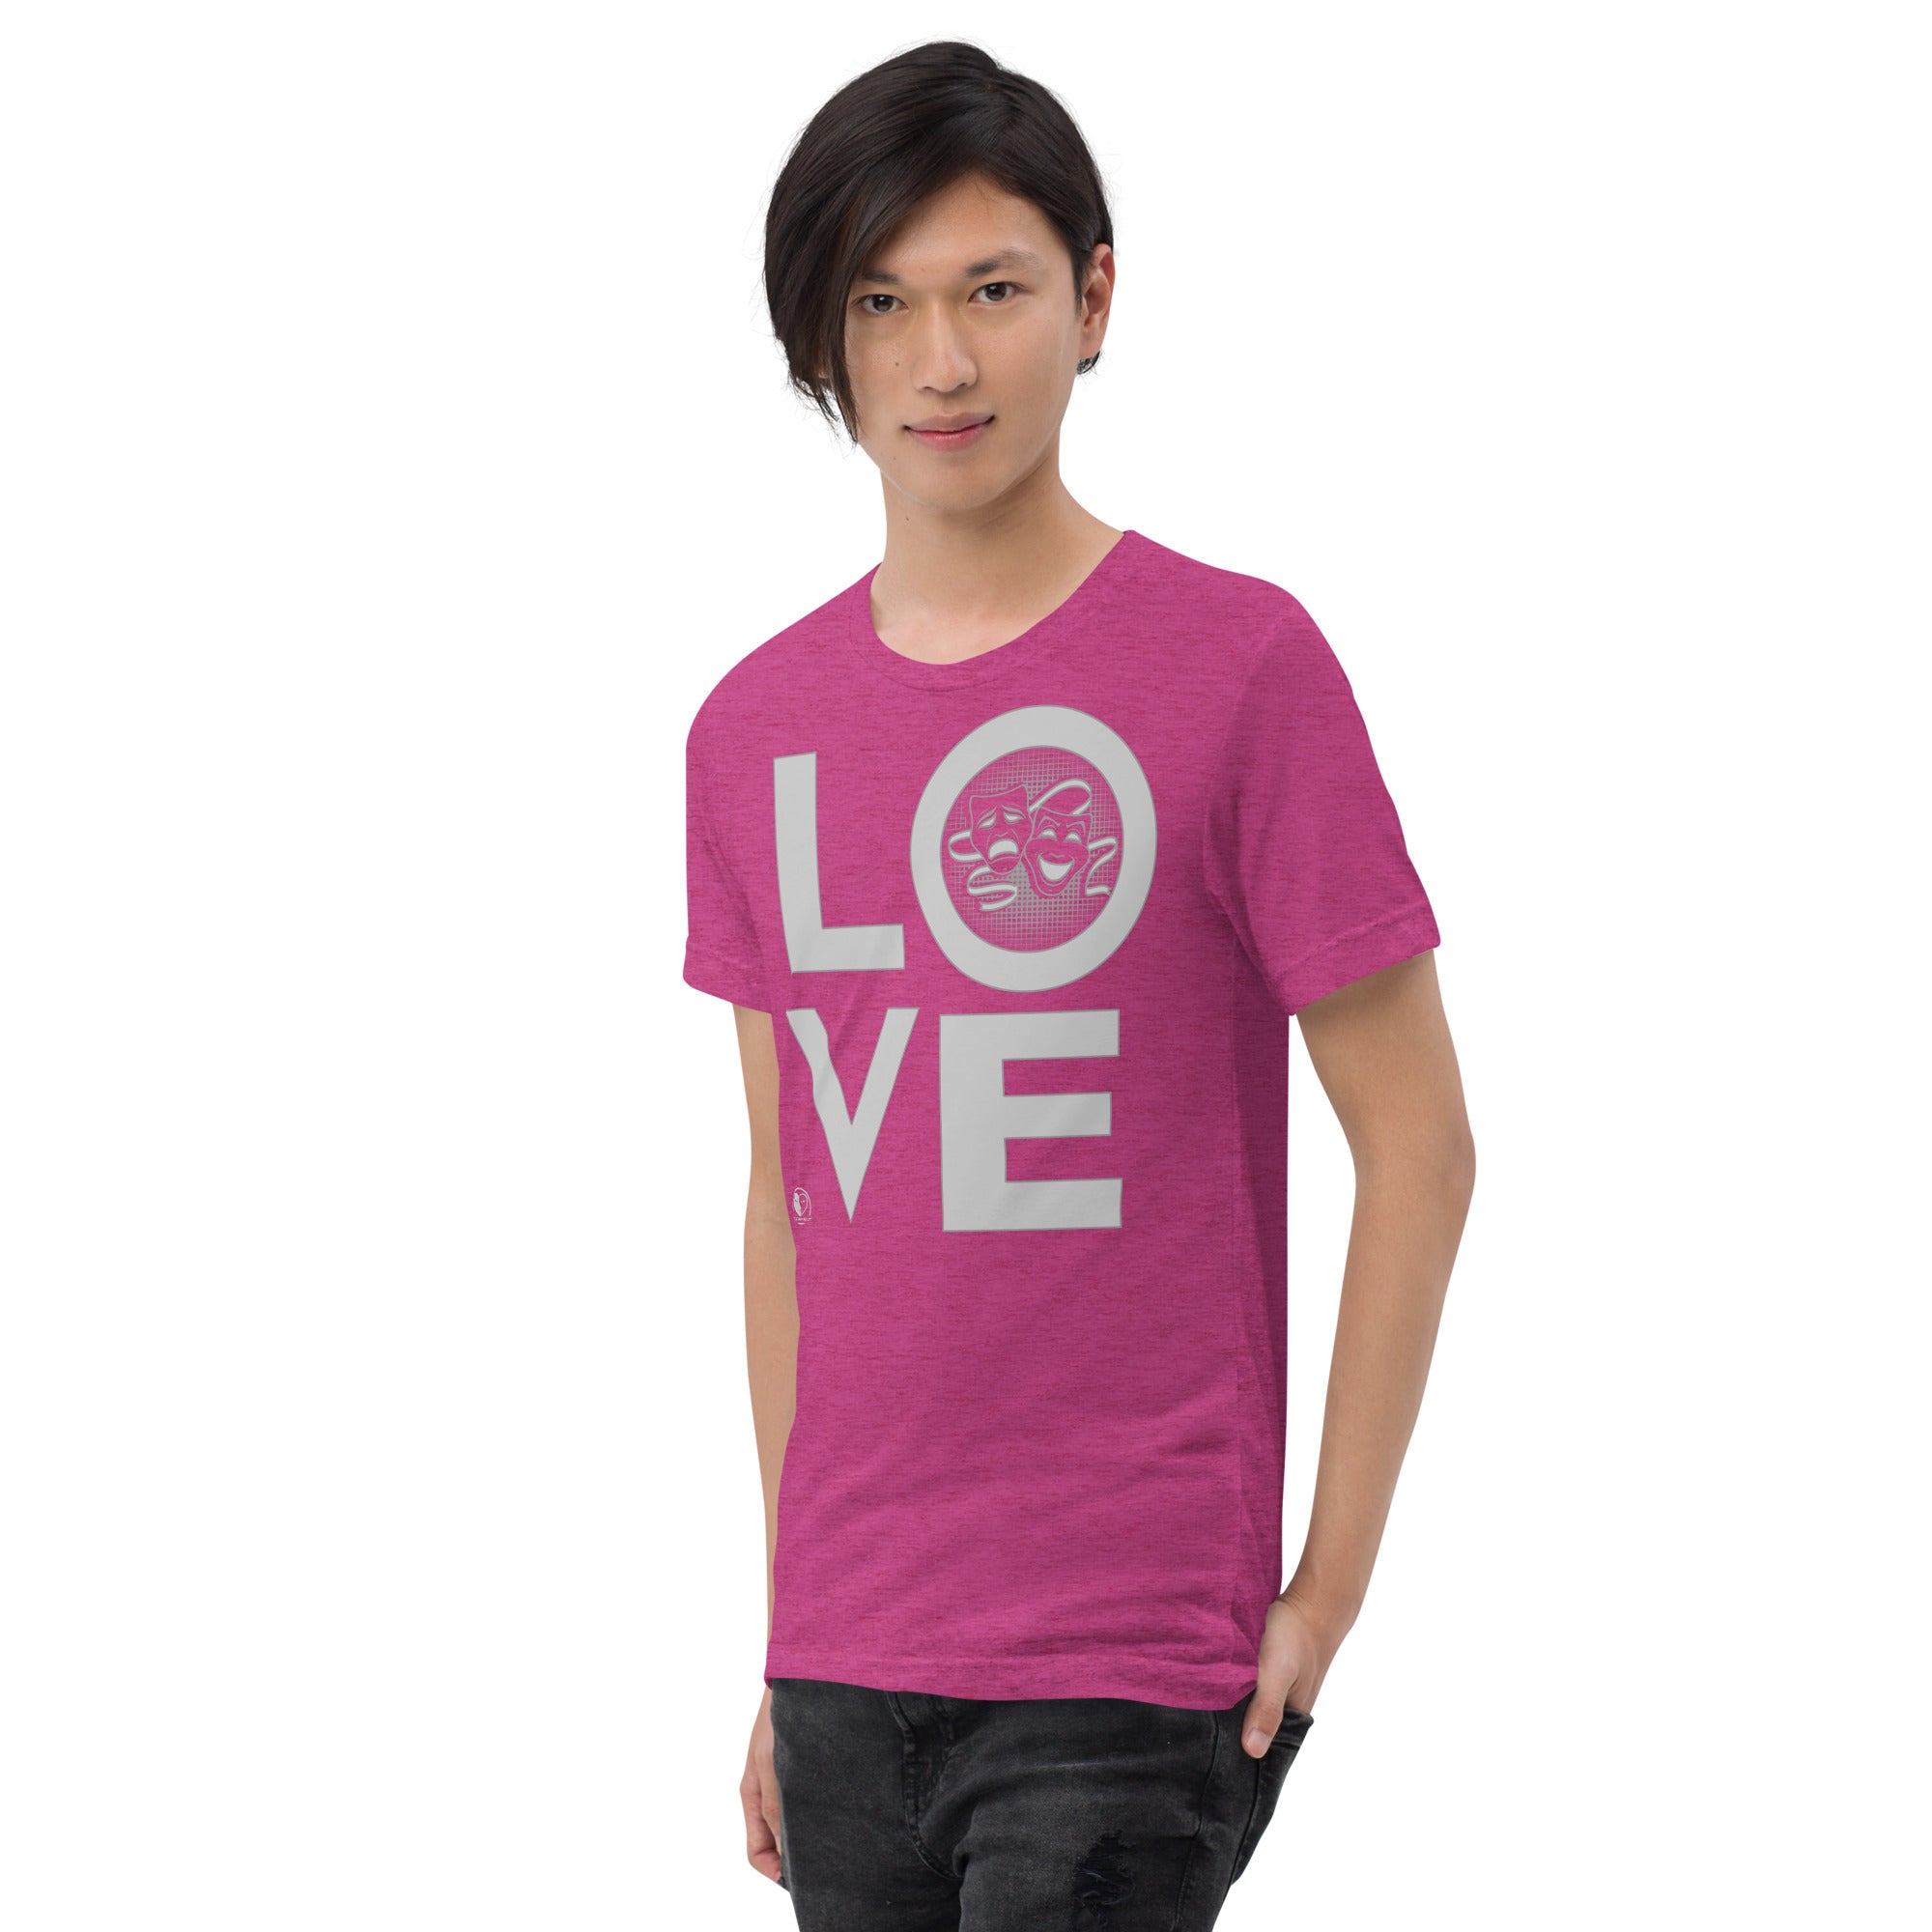 Love Drama Theatre Masks - Premium Tri-blend Short-Sleeve Unisex T-shirt